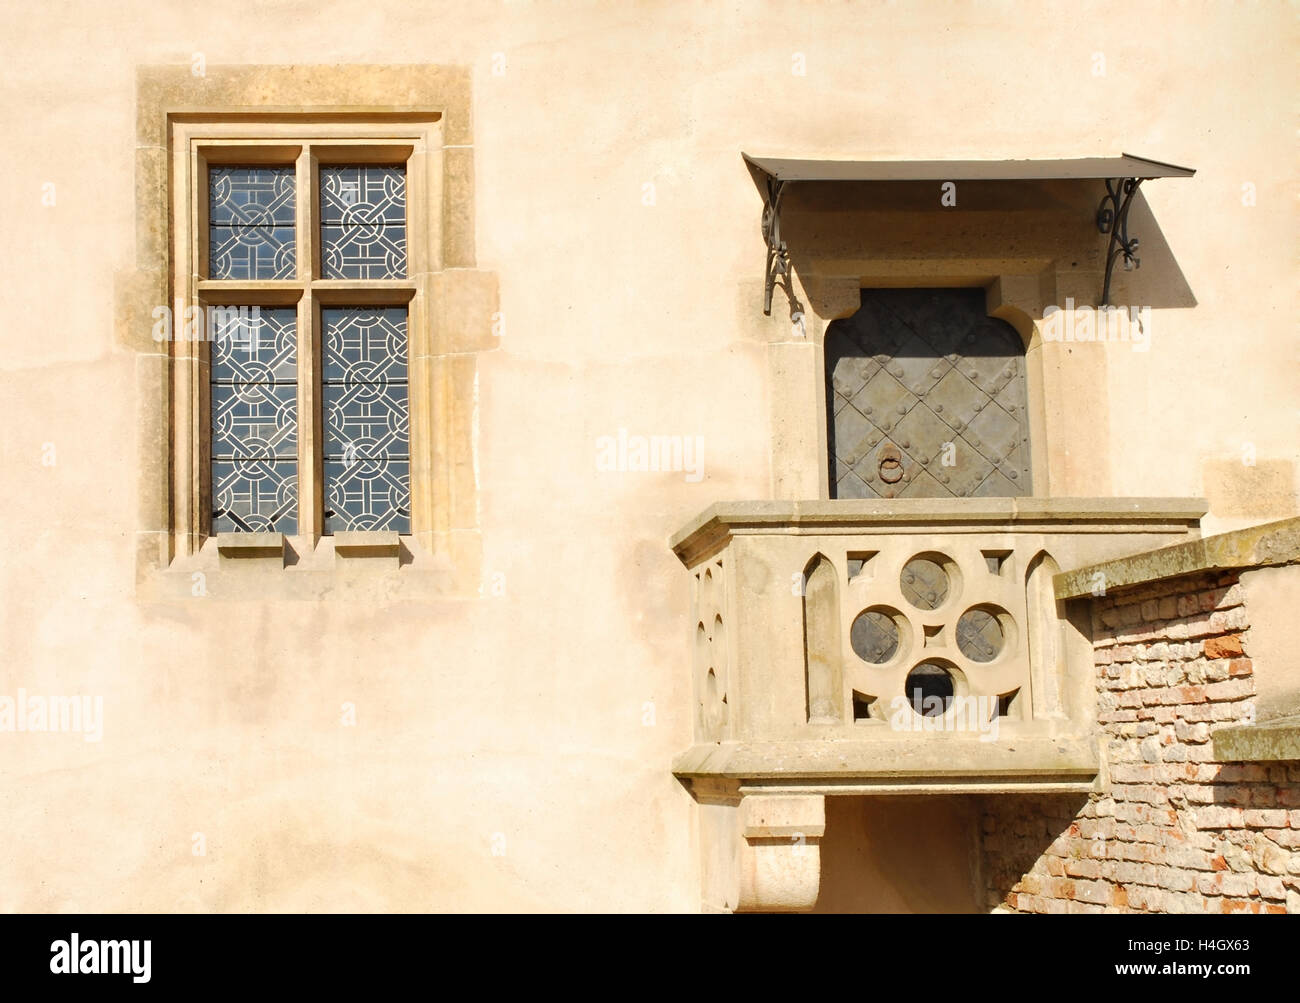 Medieval doorway and window scene. Stock Photo